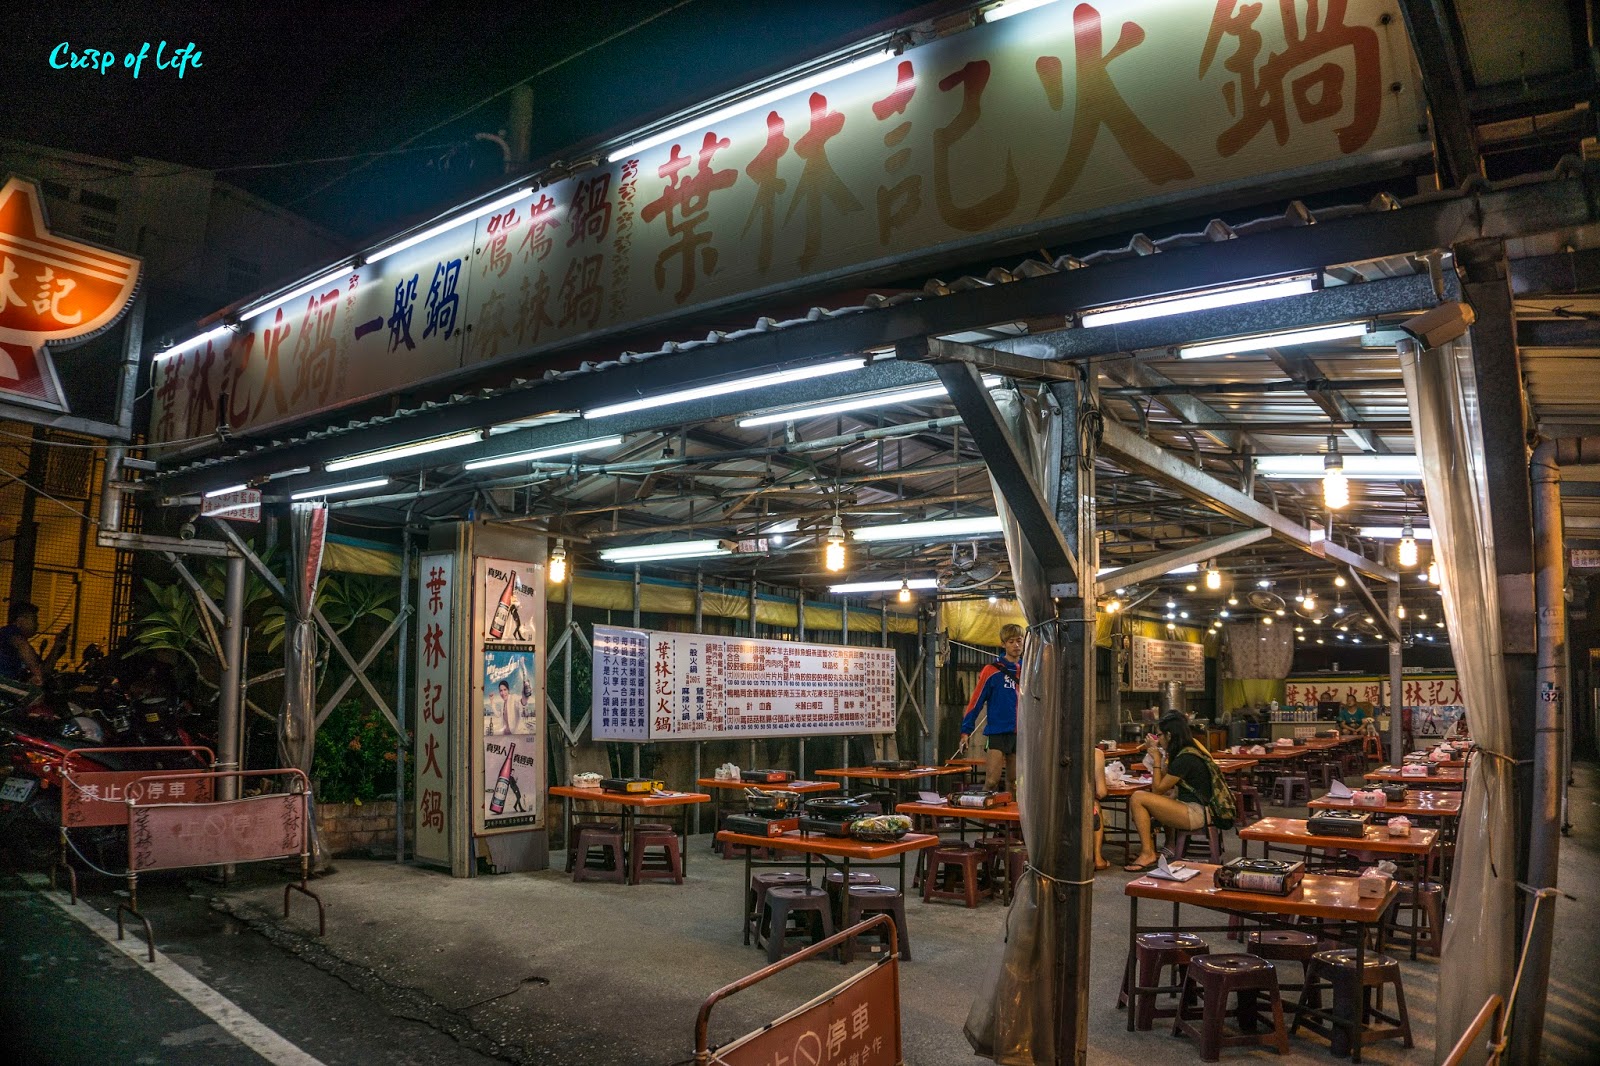 [HUALIEN 花莲] Day 6: Zi Qiang Night Market 第六天：自强夜市 - Crisp of Life